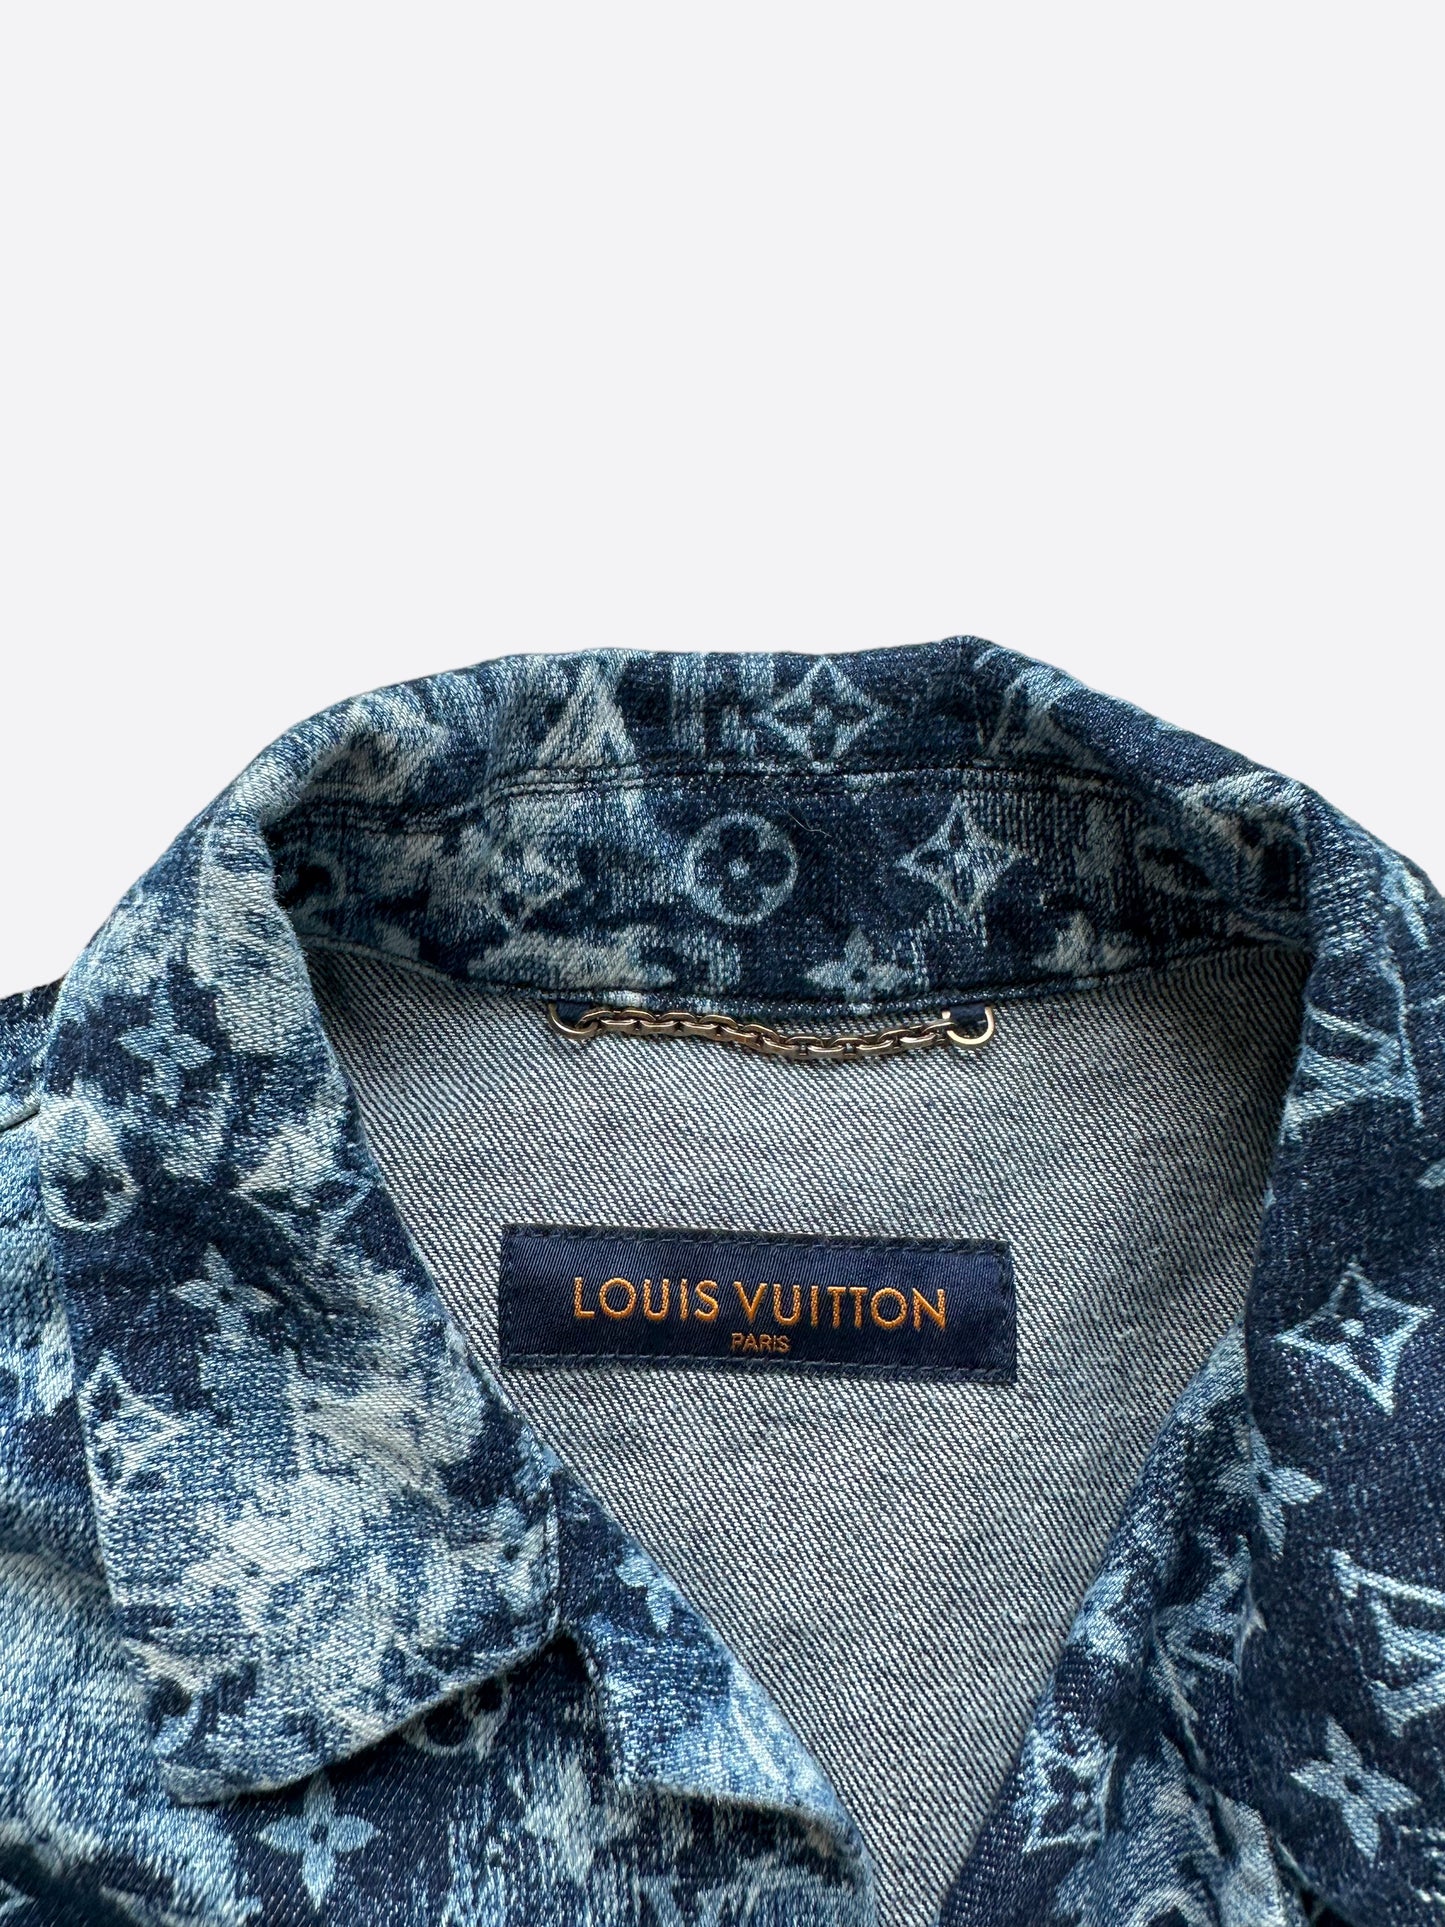 Louis Vuitton Tapestry Button Up Shirt